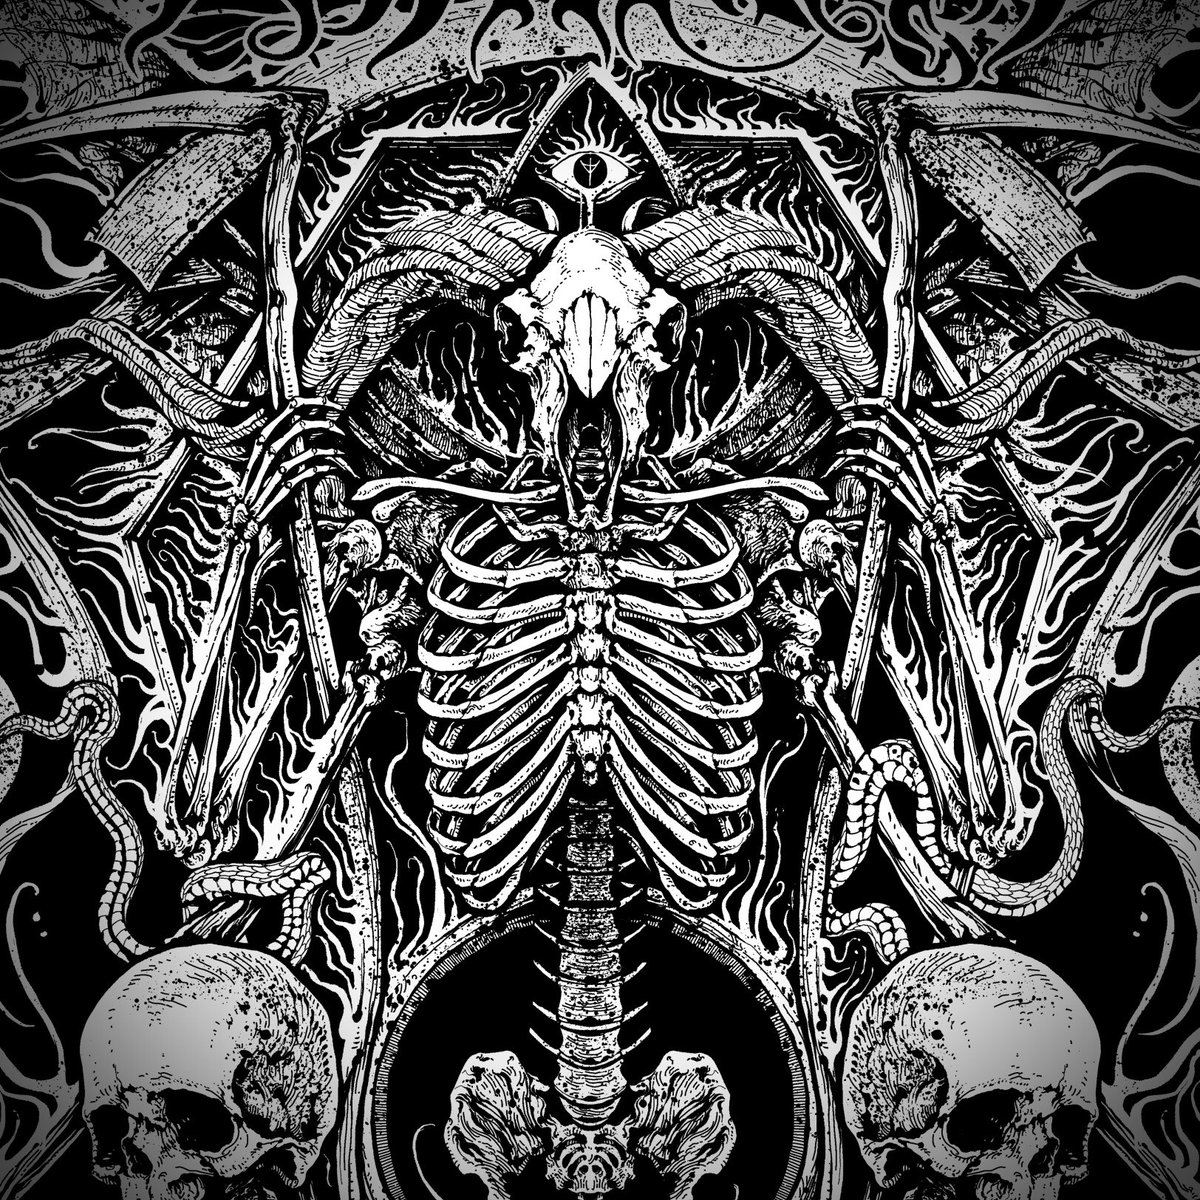 GM 🌞

#darkart #blackmetal #blackmetalartwork #Occult #Deathmetal #drawing #illustration